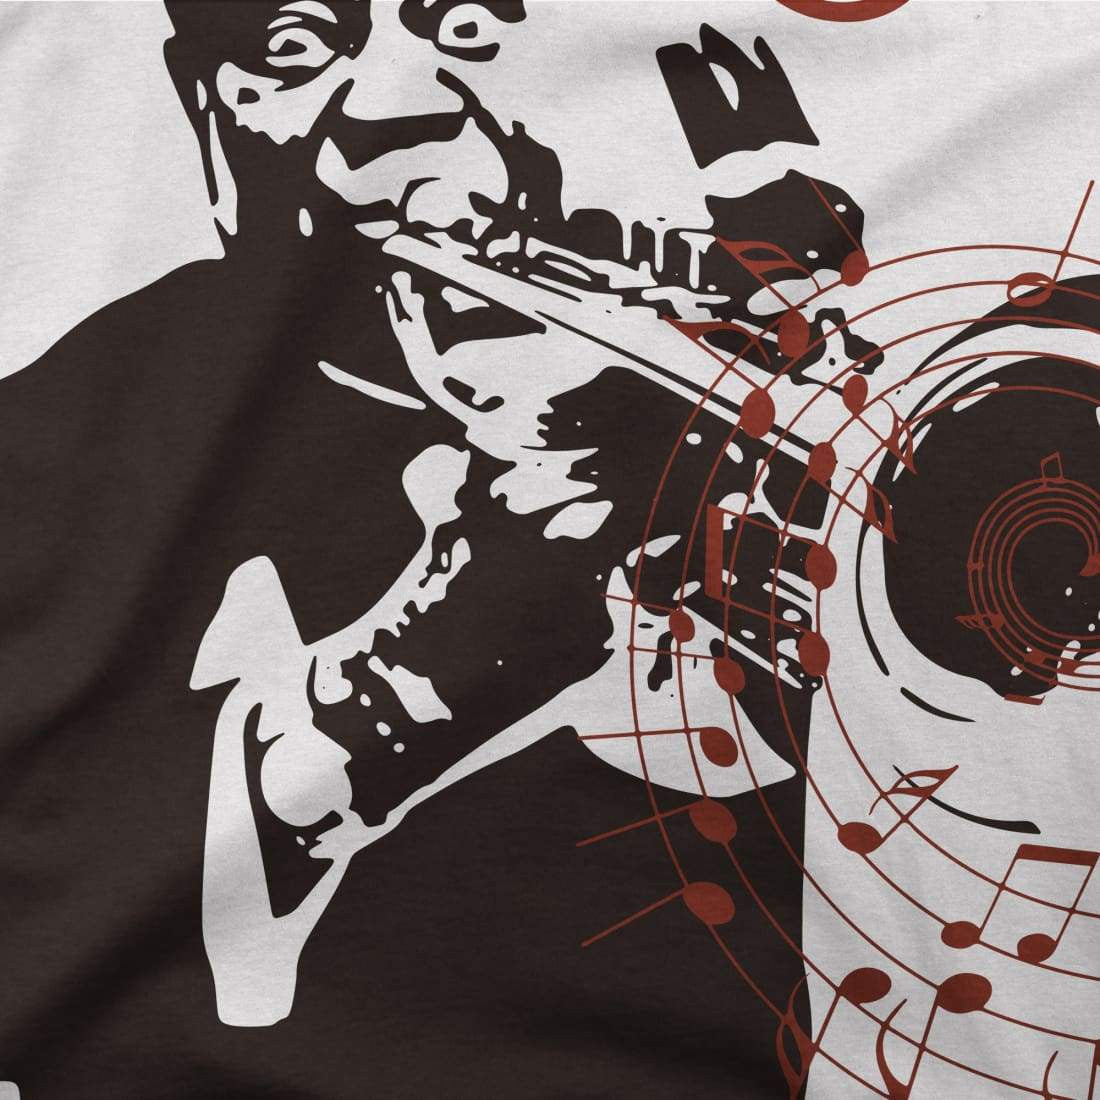 Louis Armstrong TShirt - Yumtshirt